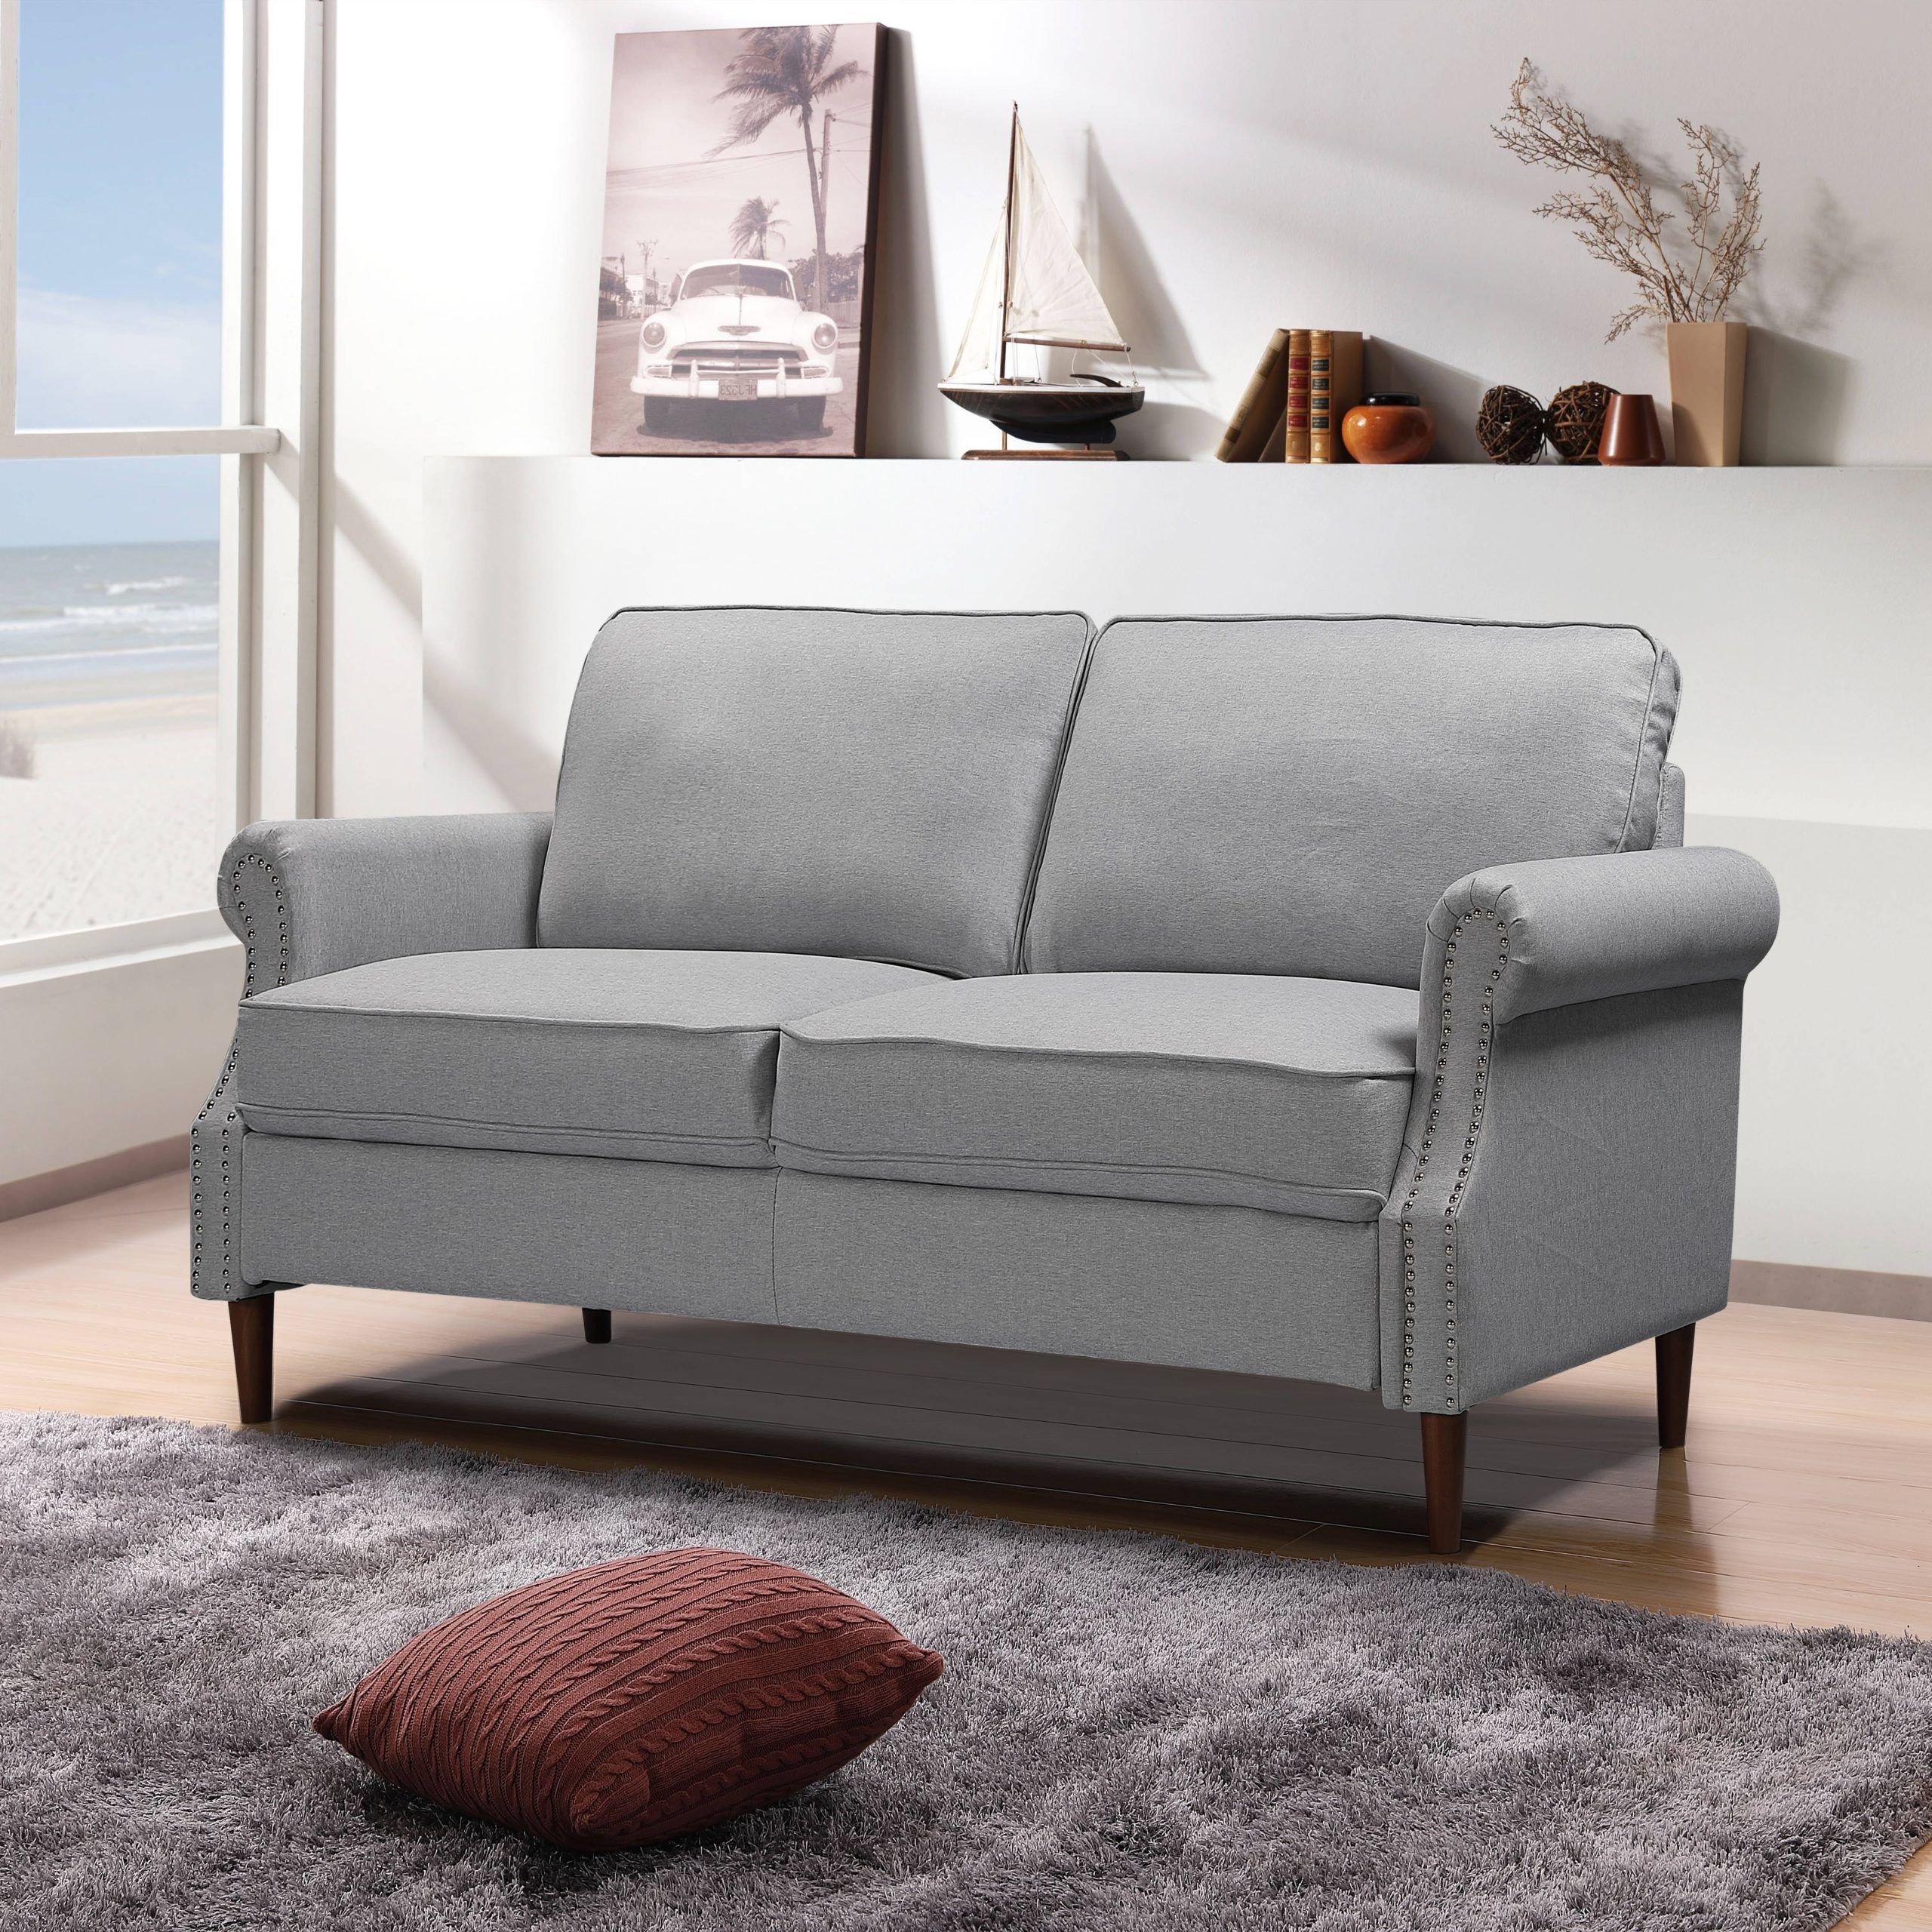 Gray Loveseat, Modern Linen Farbic Sofas For Small Spaces, Upholstered Intended For Modern Light Grey Loveseat Sofas (Gallery 19 of 20)